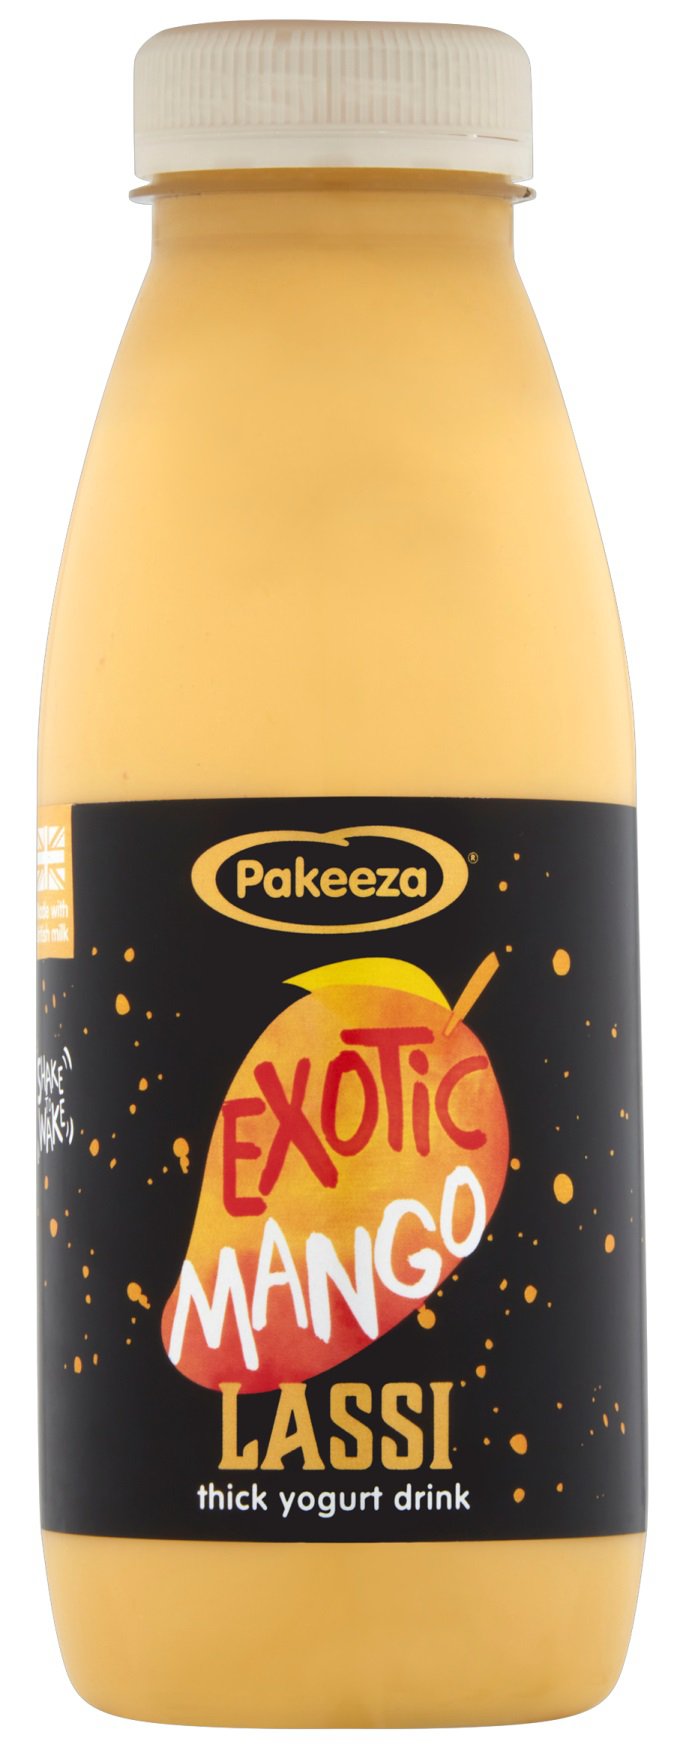 Pakeeza_Exotic_Mango_Lassi_Thick_Yogurt_Drink_330g b.jpg